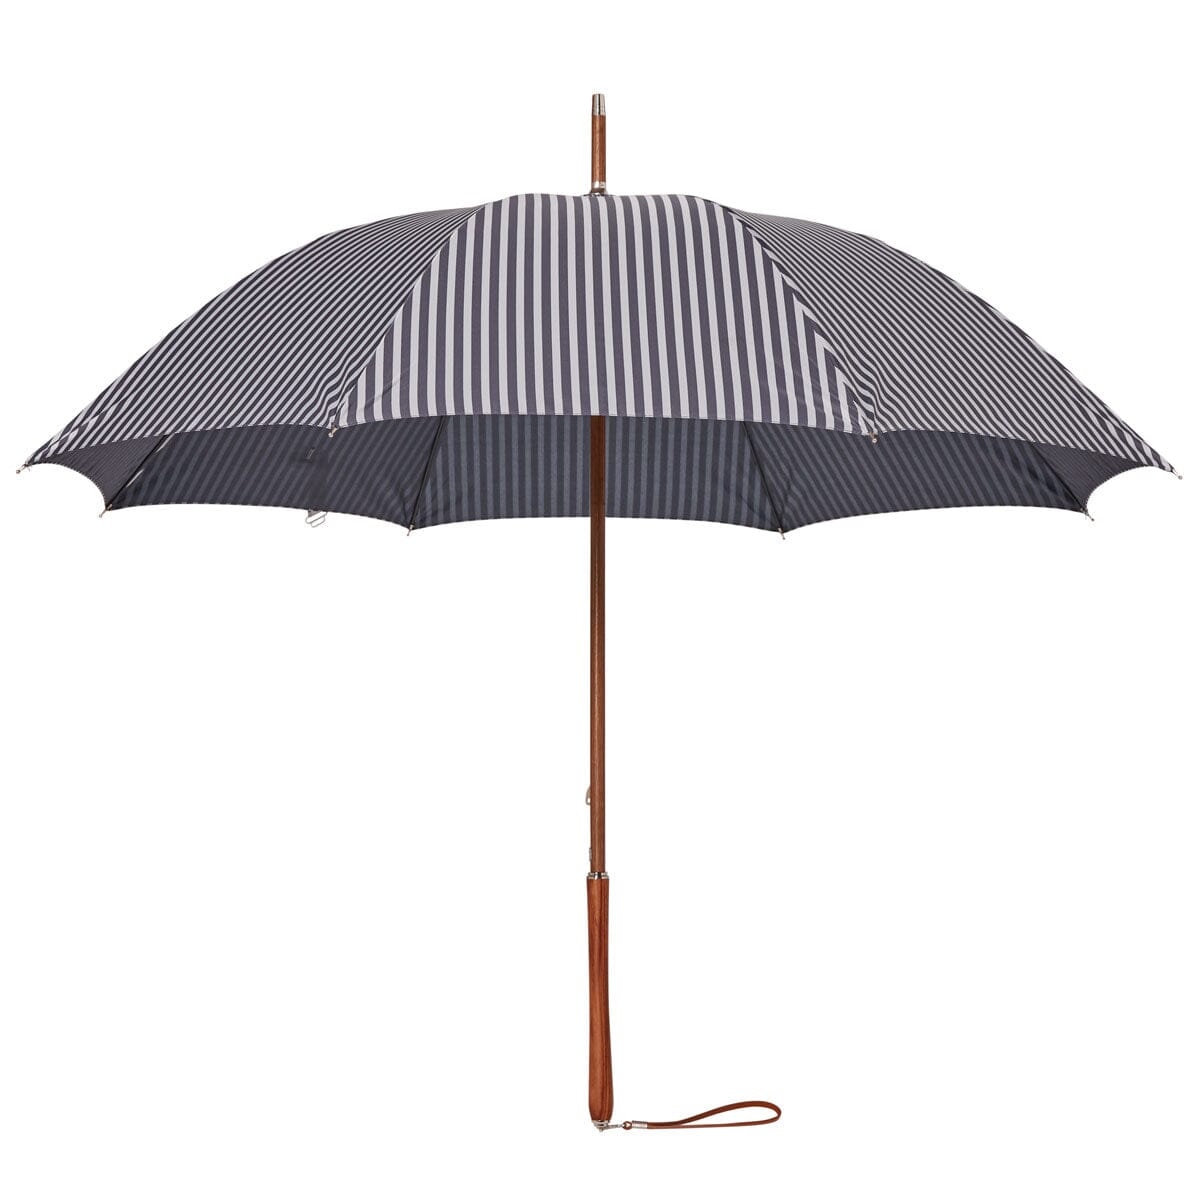 The Rain Umbrella - Lauren's Navy Stripe